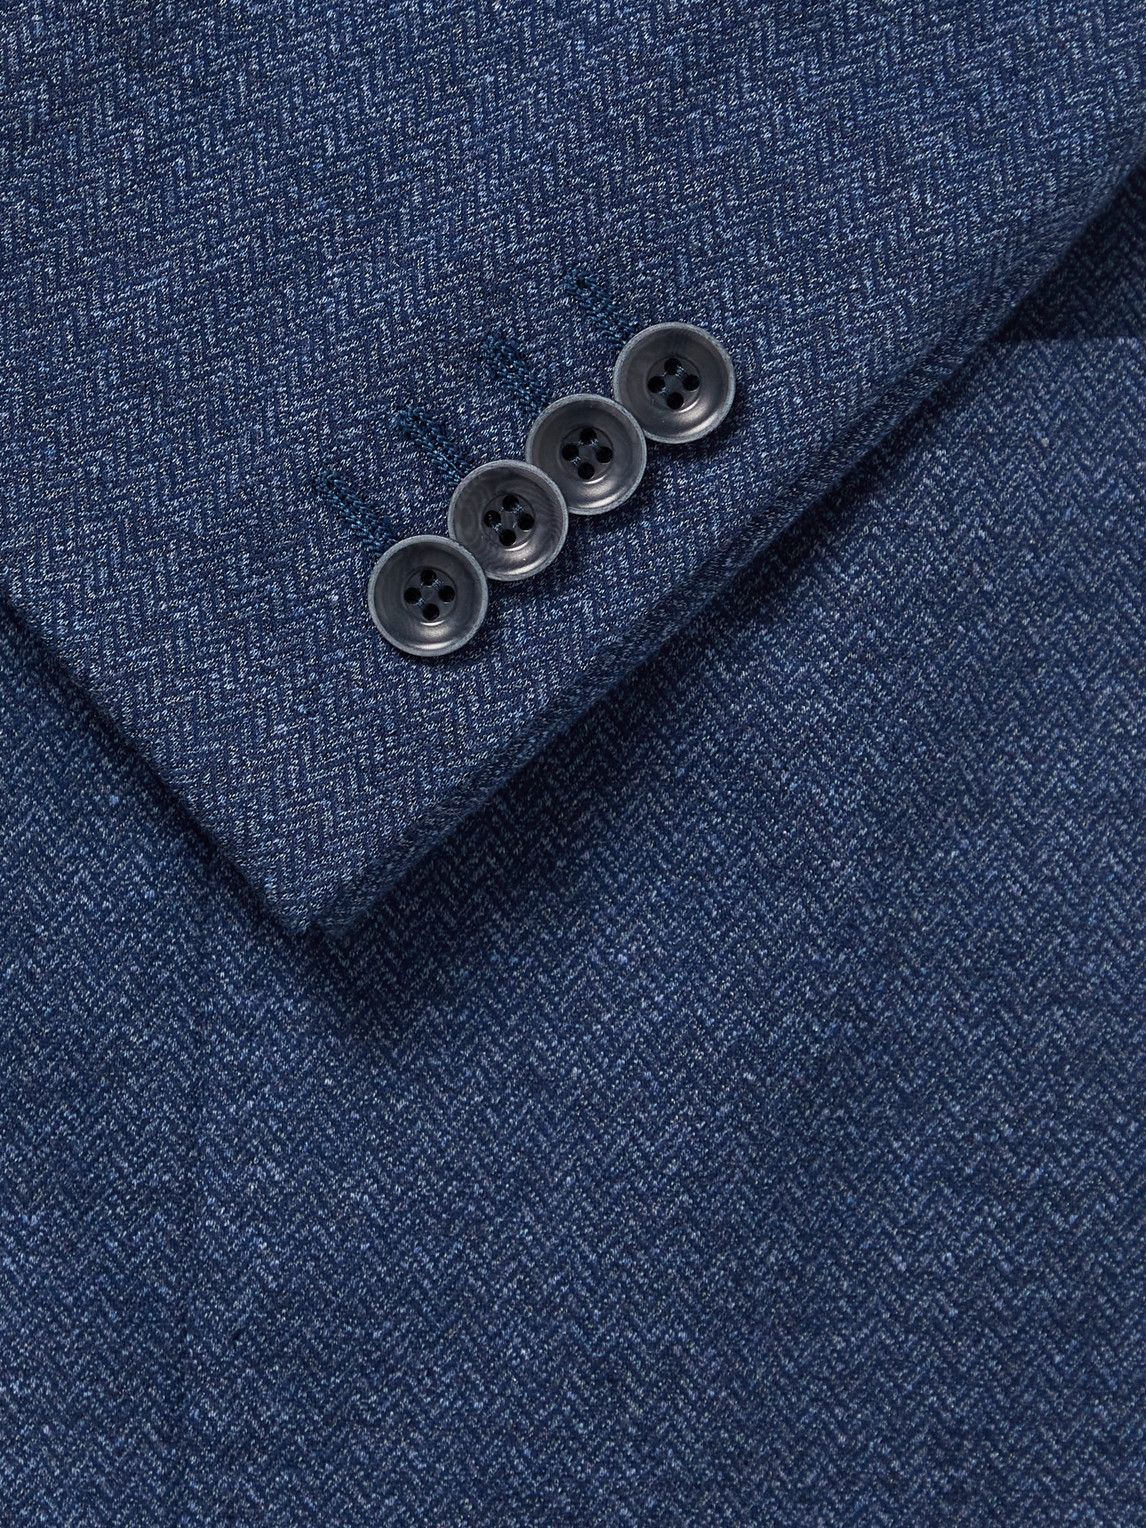 Canali - Unstructured Herringbone Cotton-Blend Jersey Blazer - Blue Canali